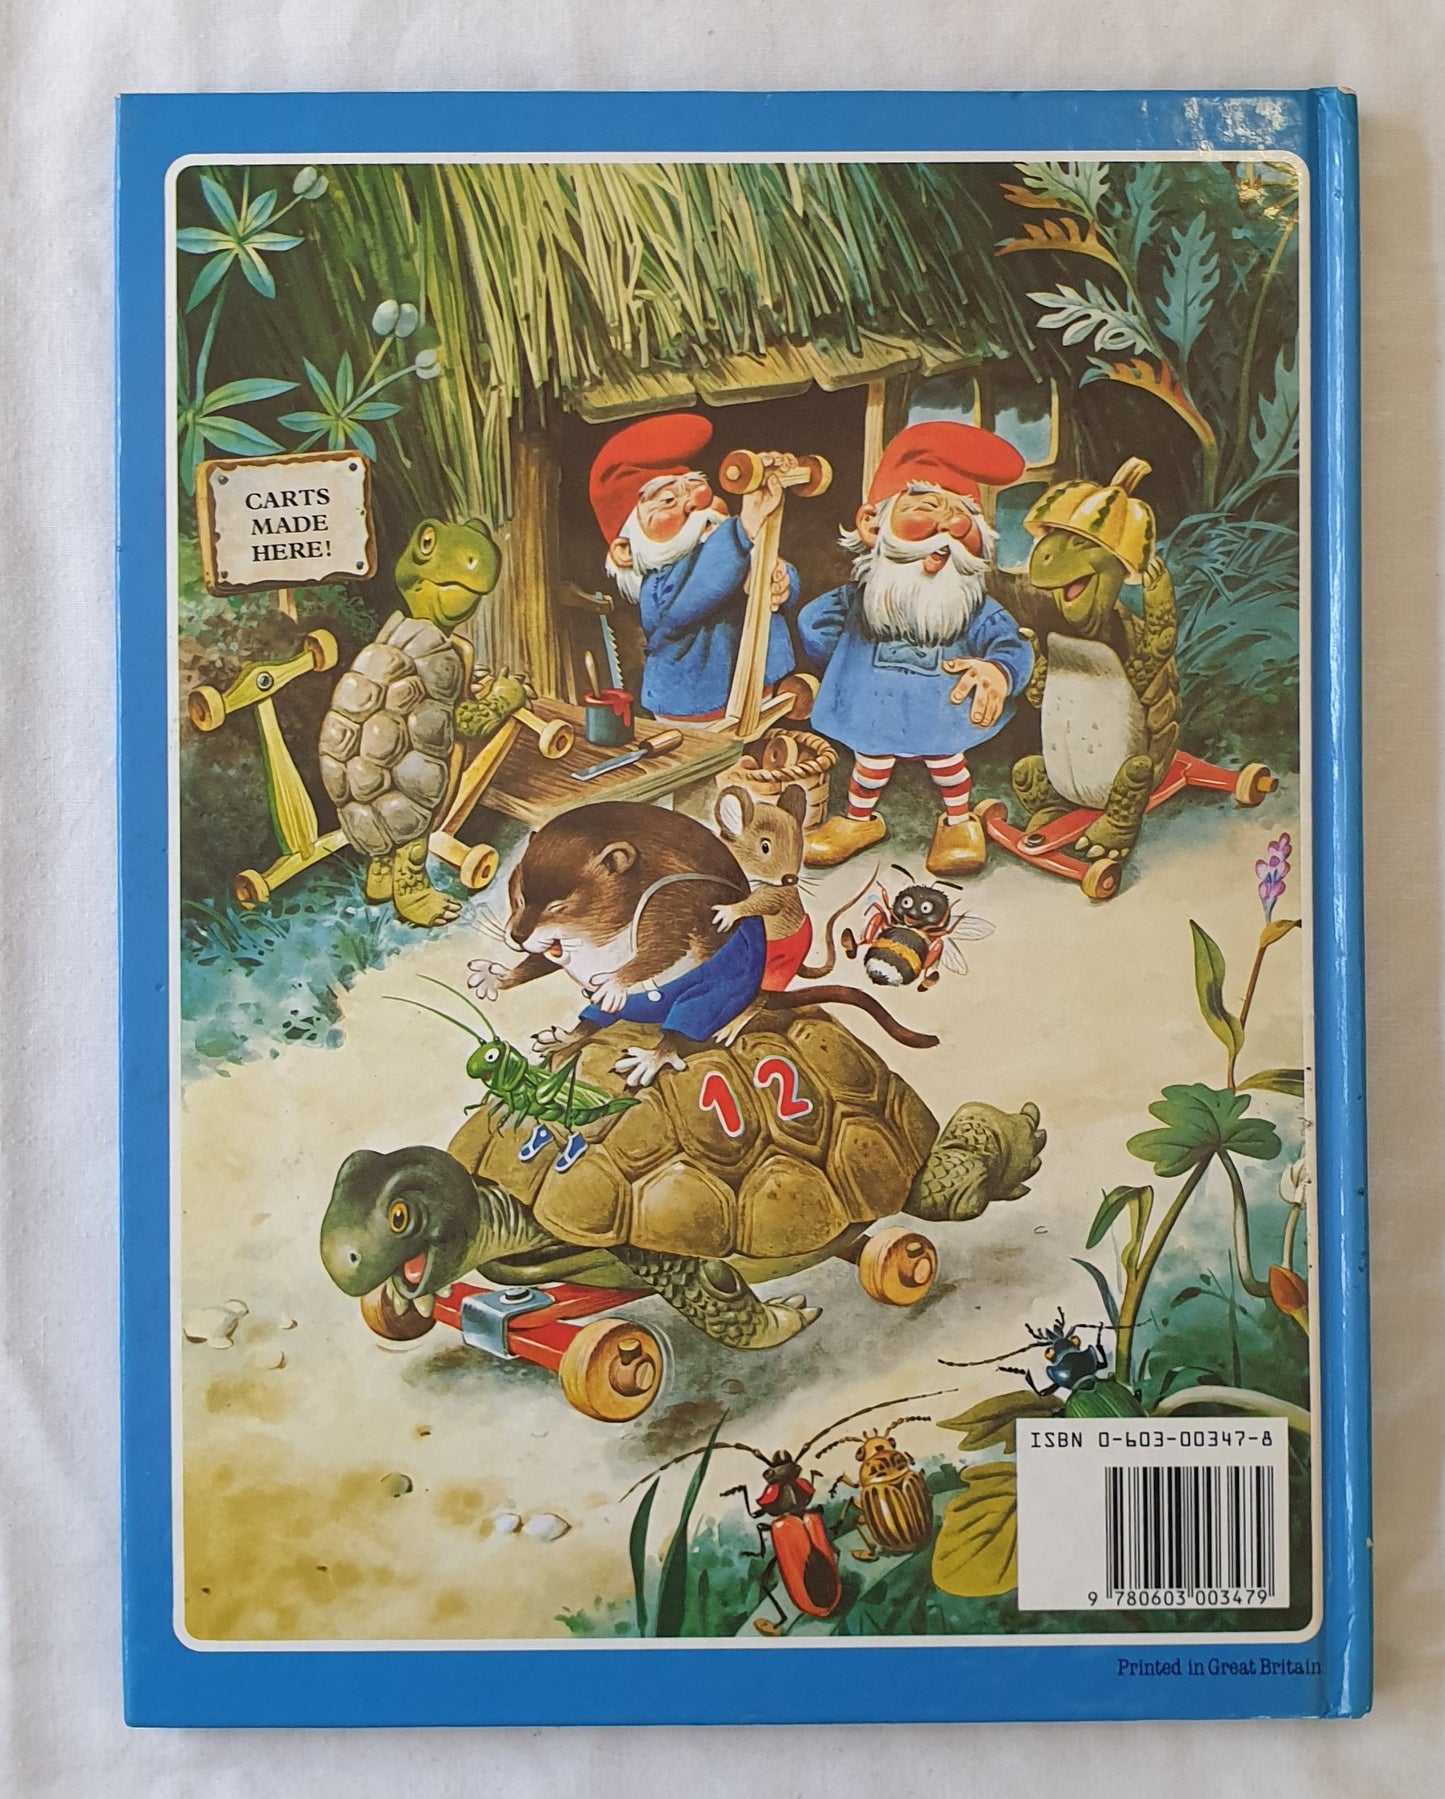 The Woodland Folk Meet The Gnomes by Tony Wolf